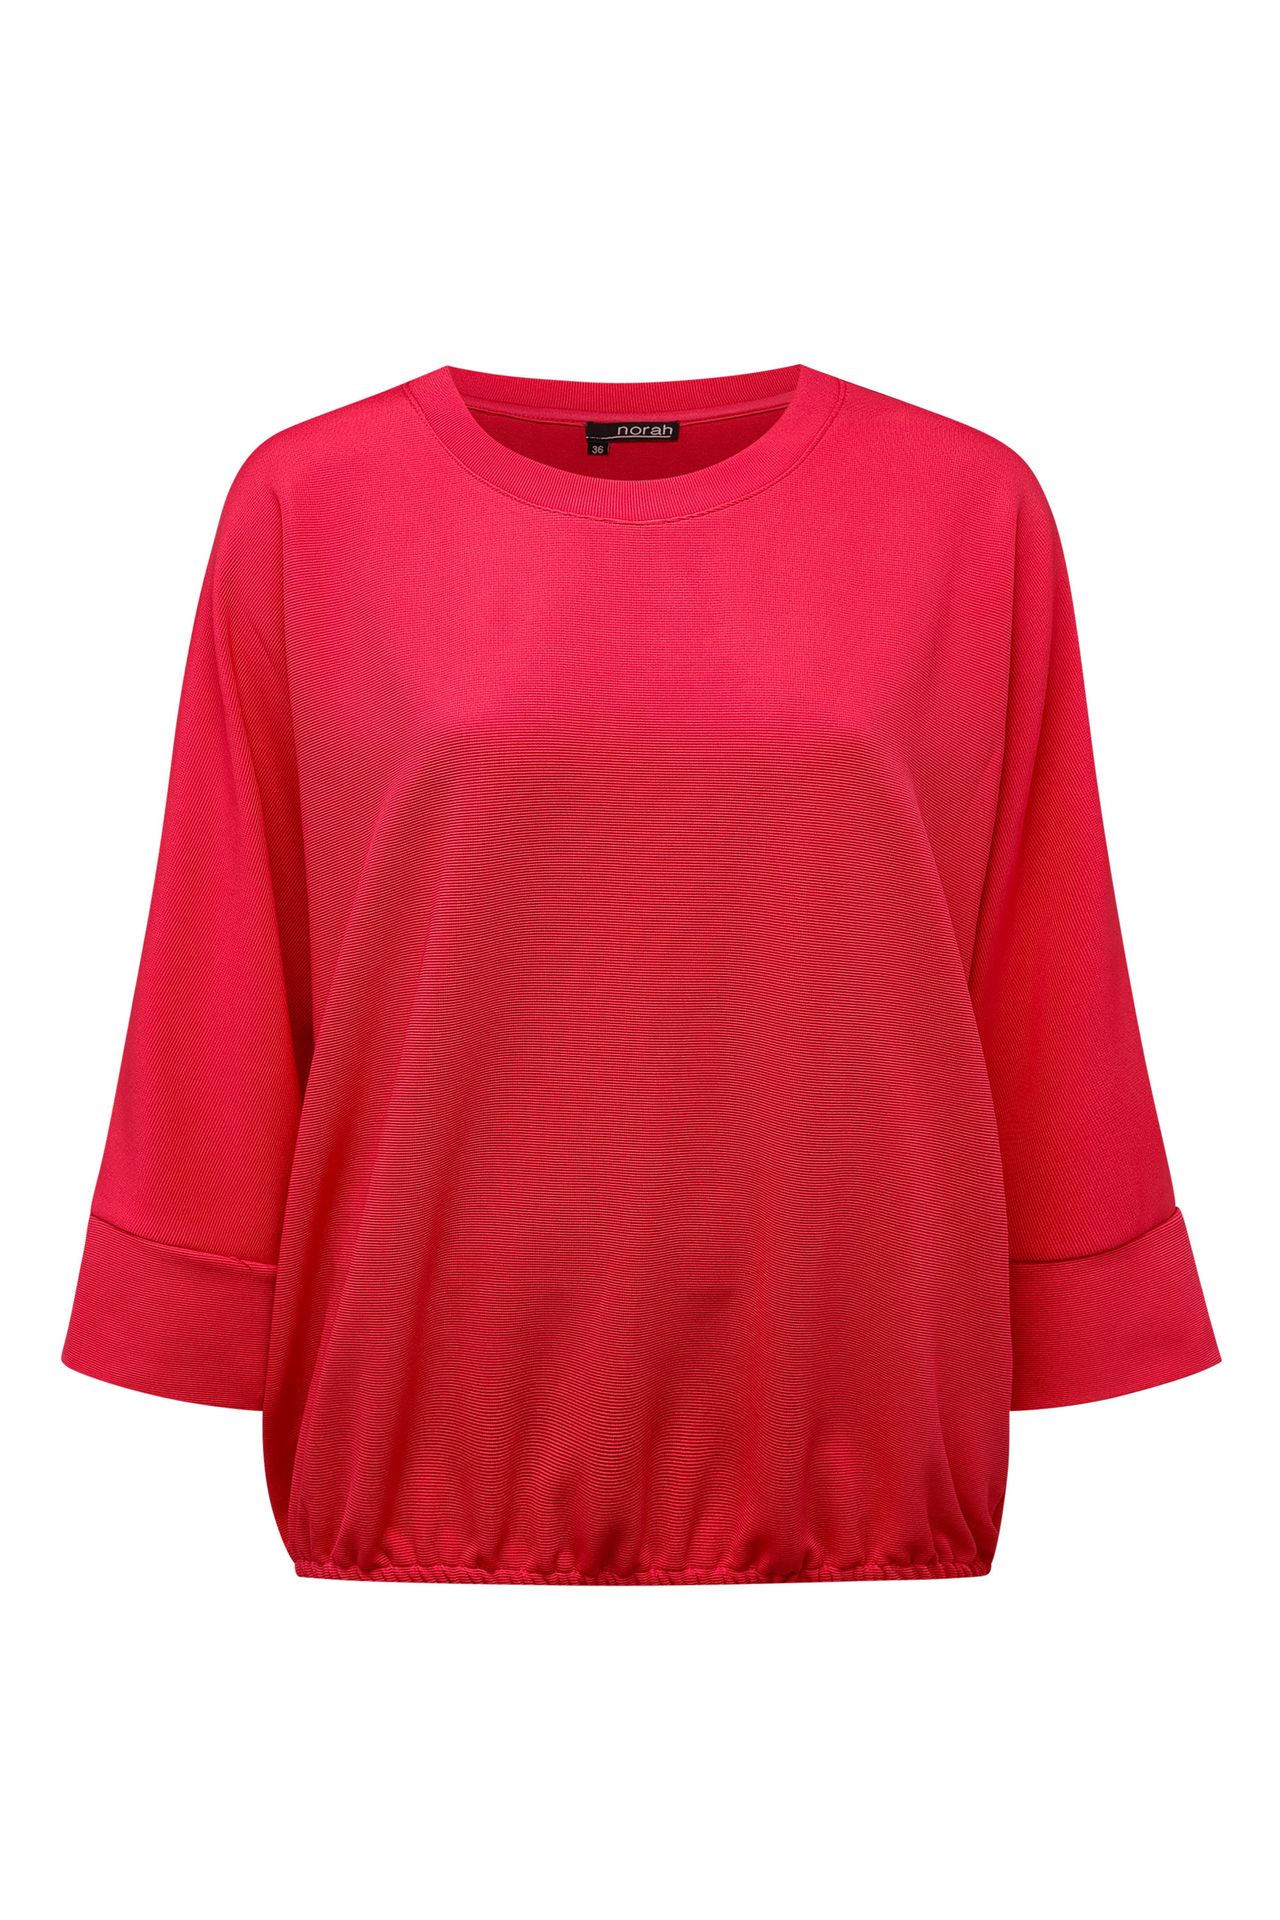 Norah Roze trui met driekwart mouwen fuchsia 213938-953